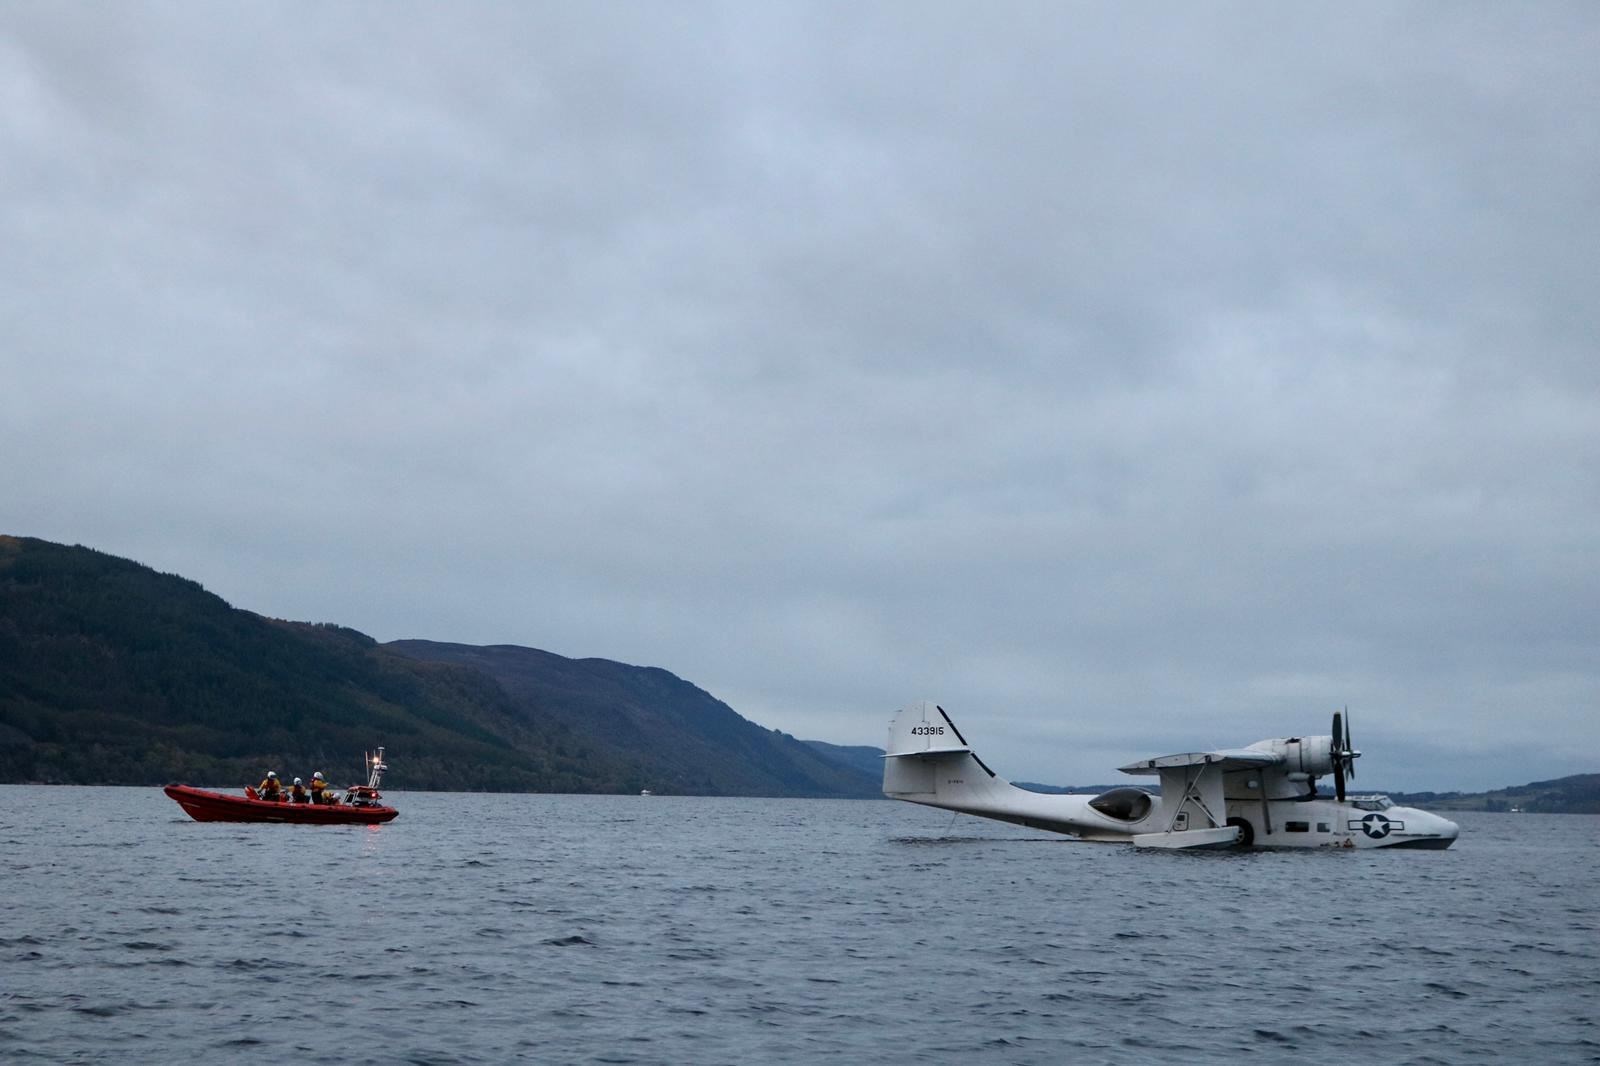 Loch Ness RNLI stranded plane Kirsten Dawn Ferguson